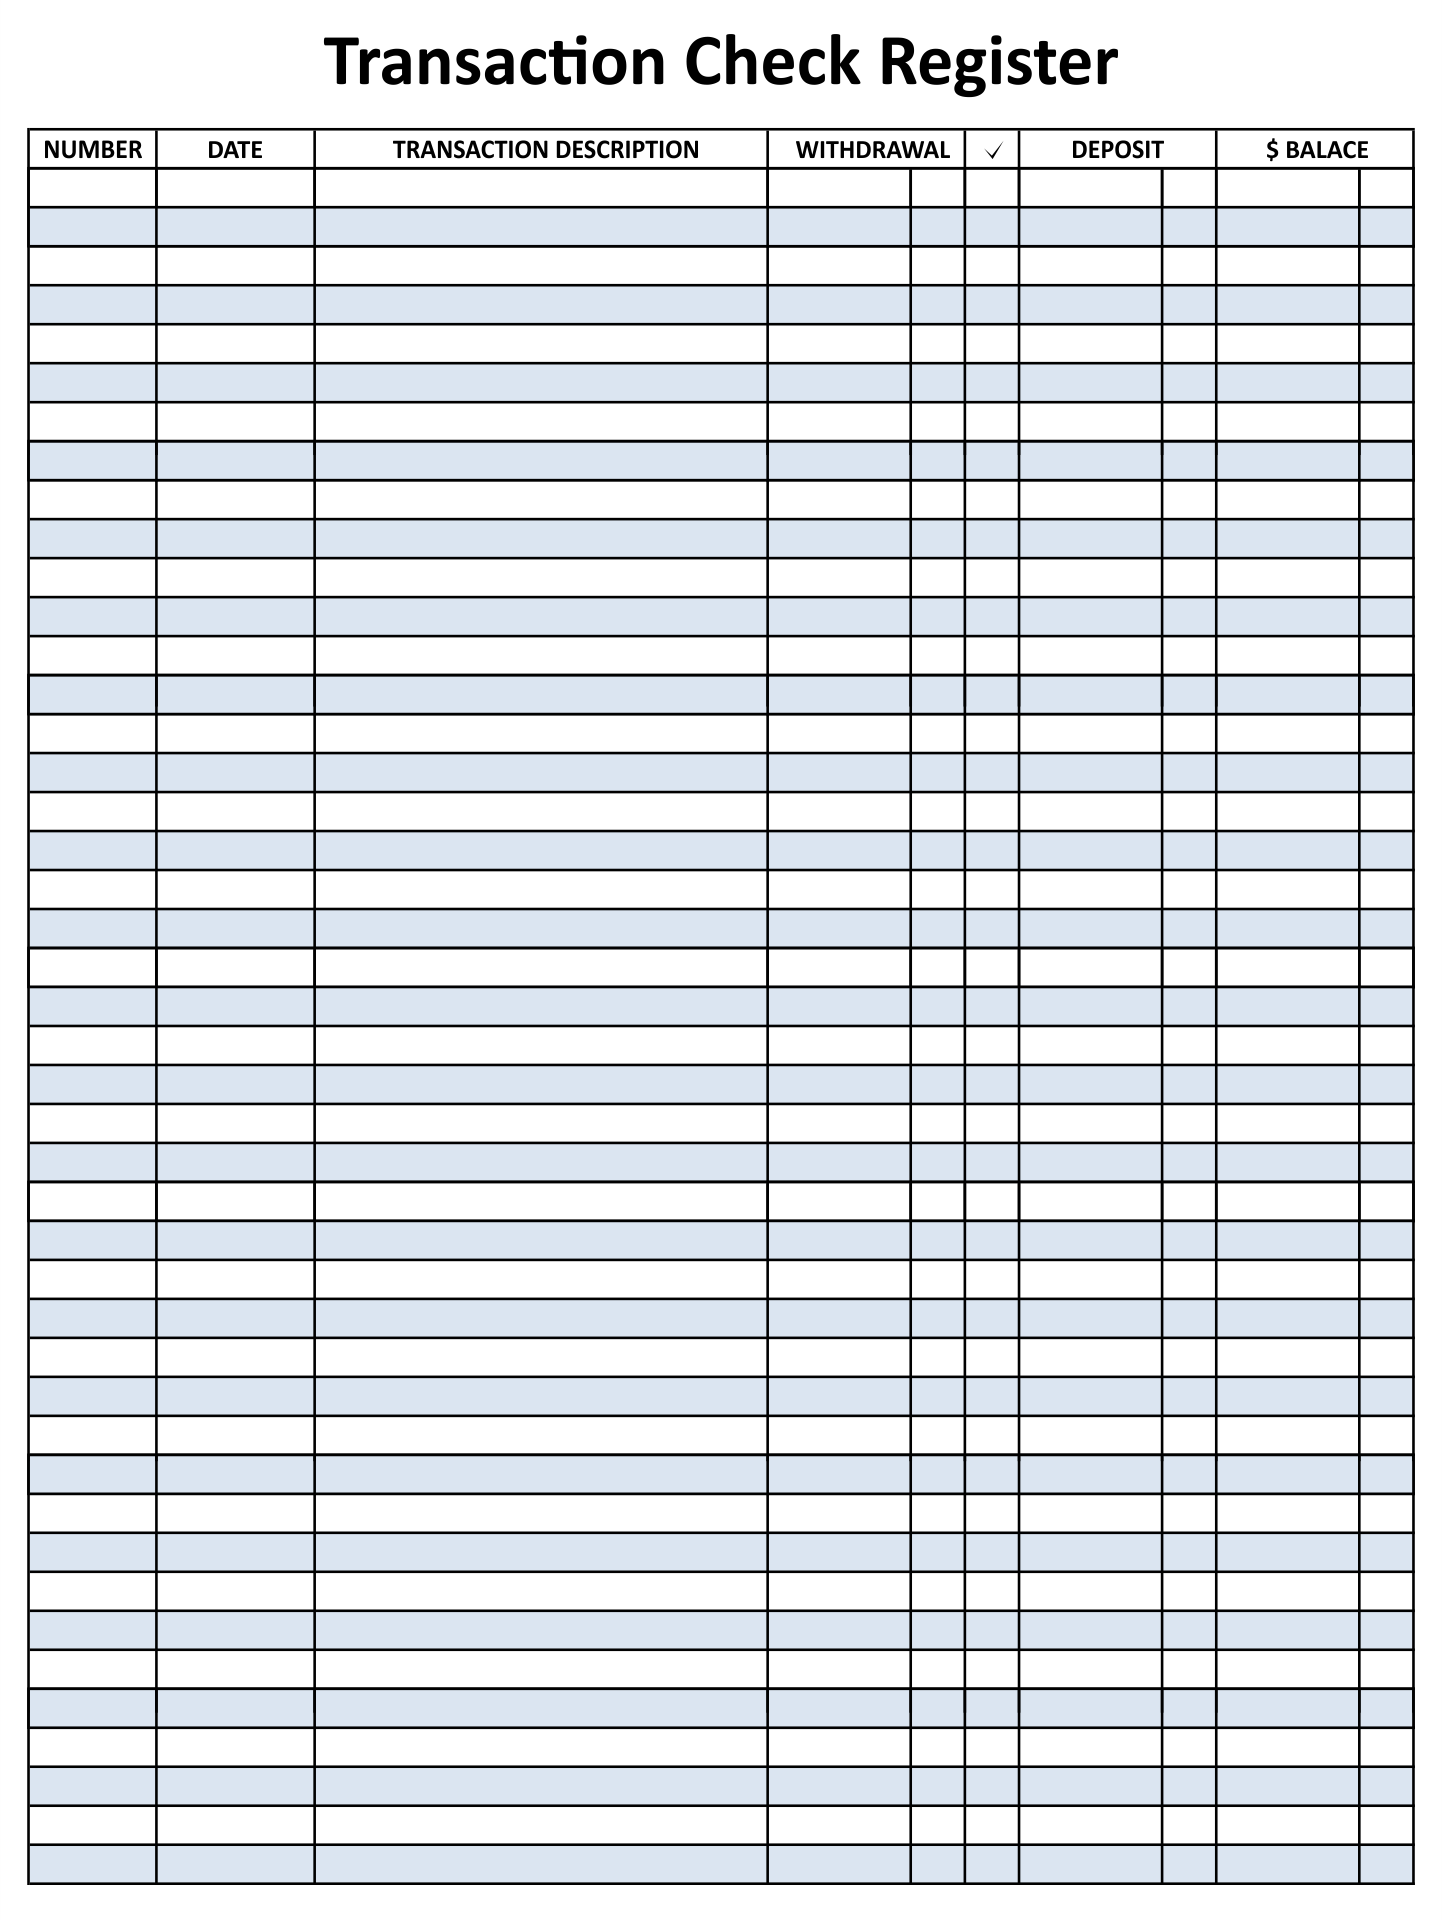 free printable checkbook register calendar 2018